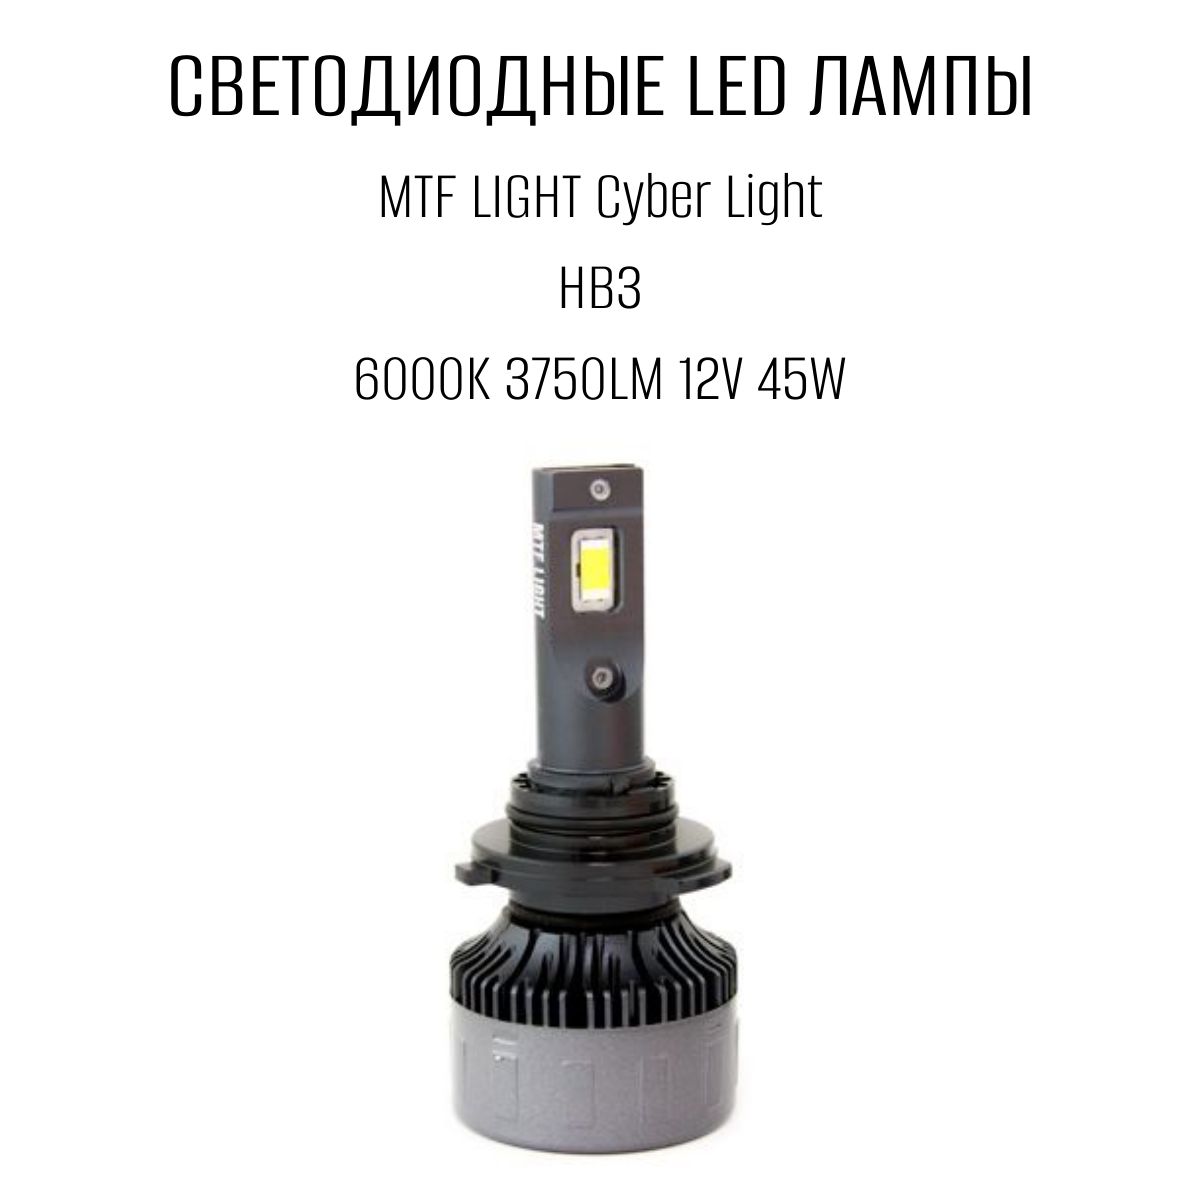 Mtf cyber light pro h7. Светодиодные лампы Cyber Light hb4. MTF Cyber Light h11. MTF hb4 6000k. Лампы MTF hb3.